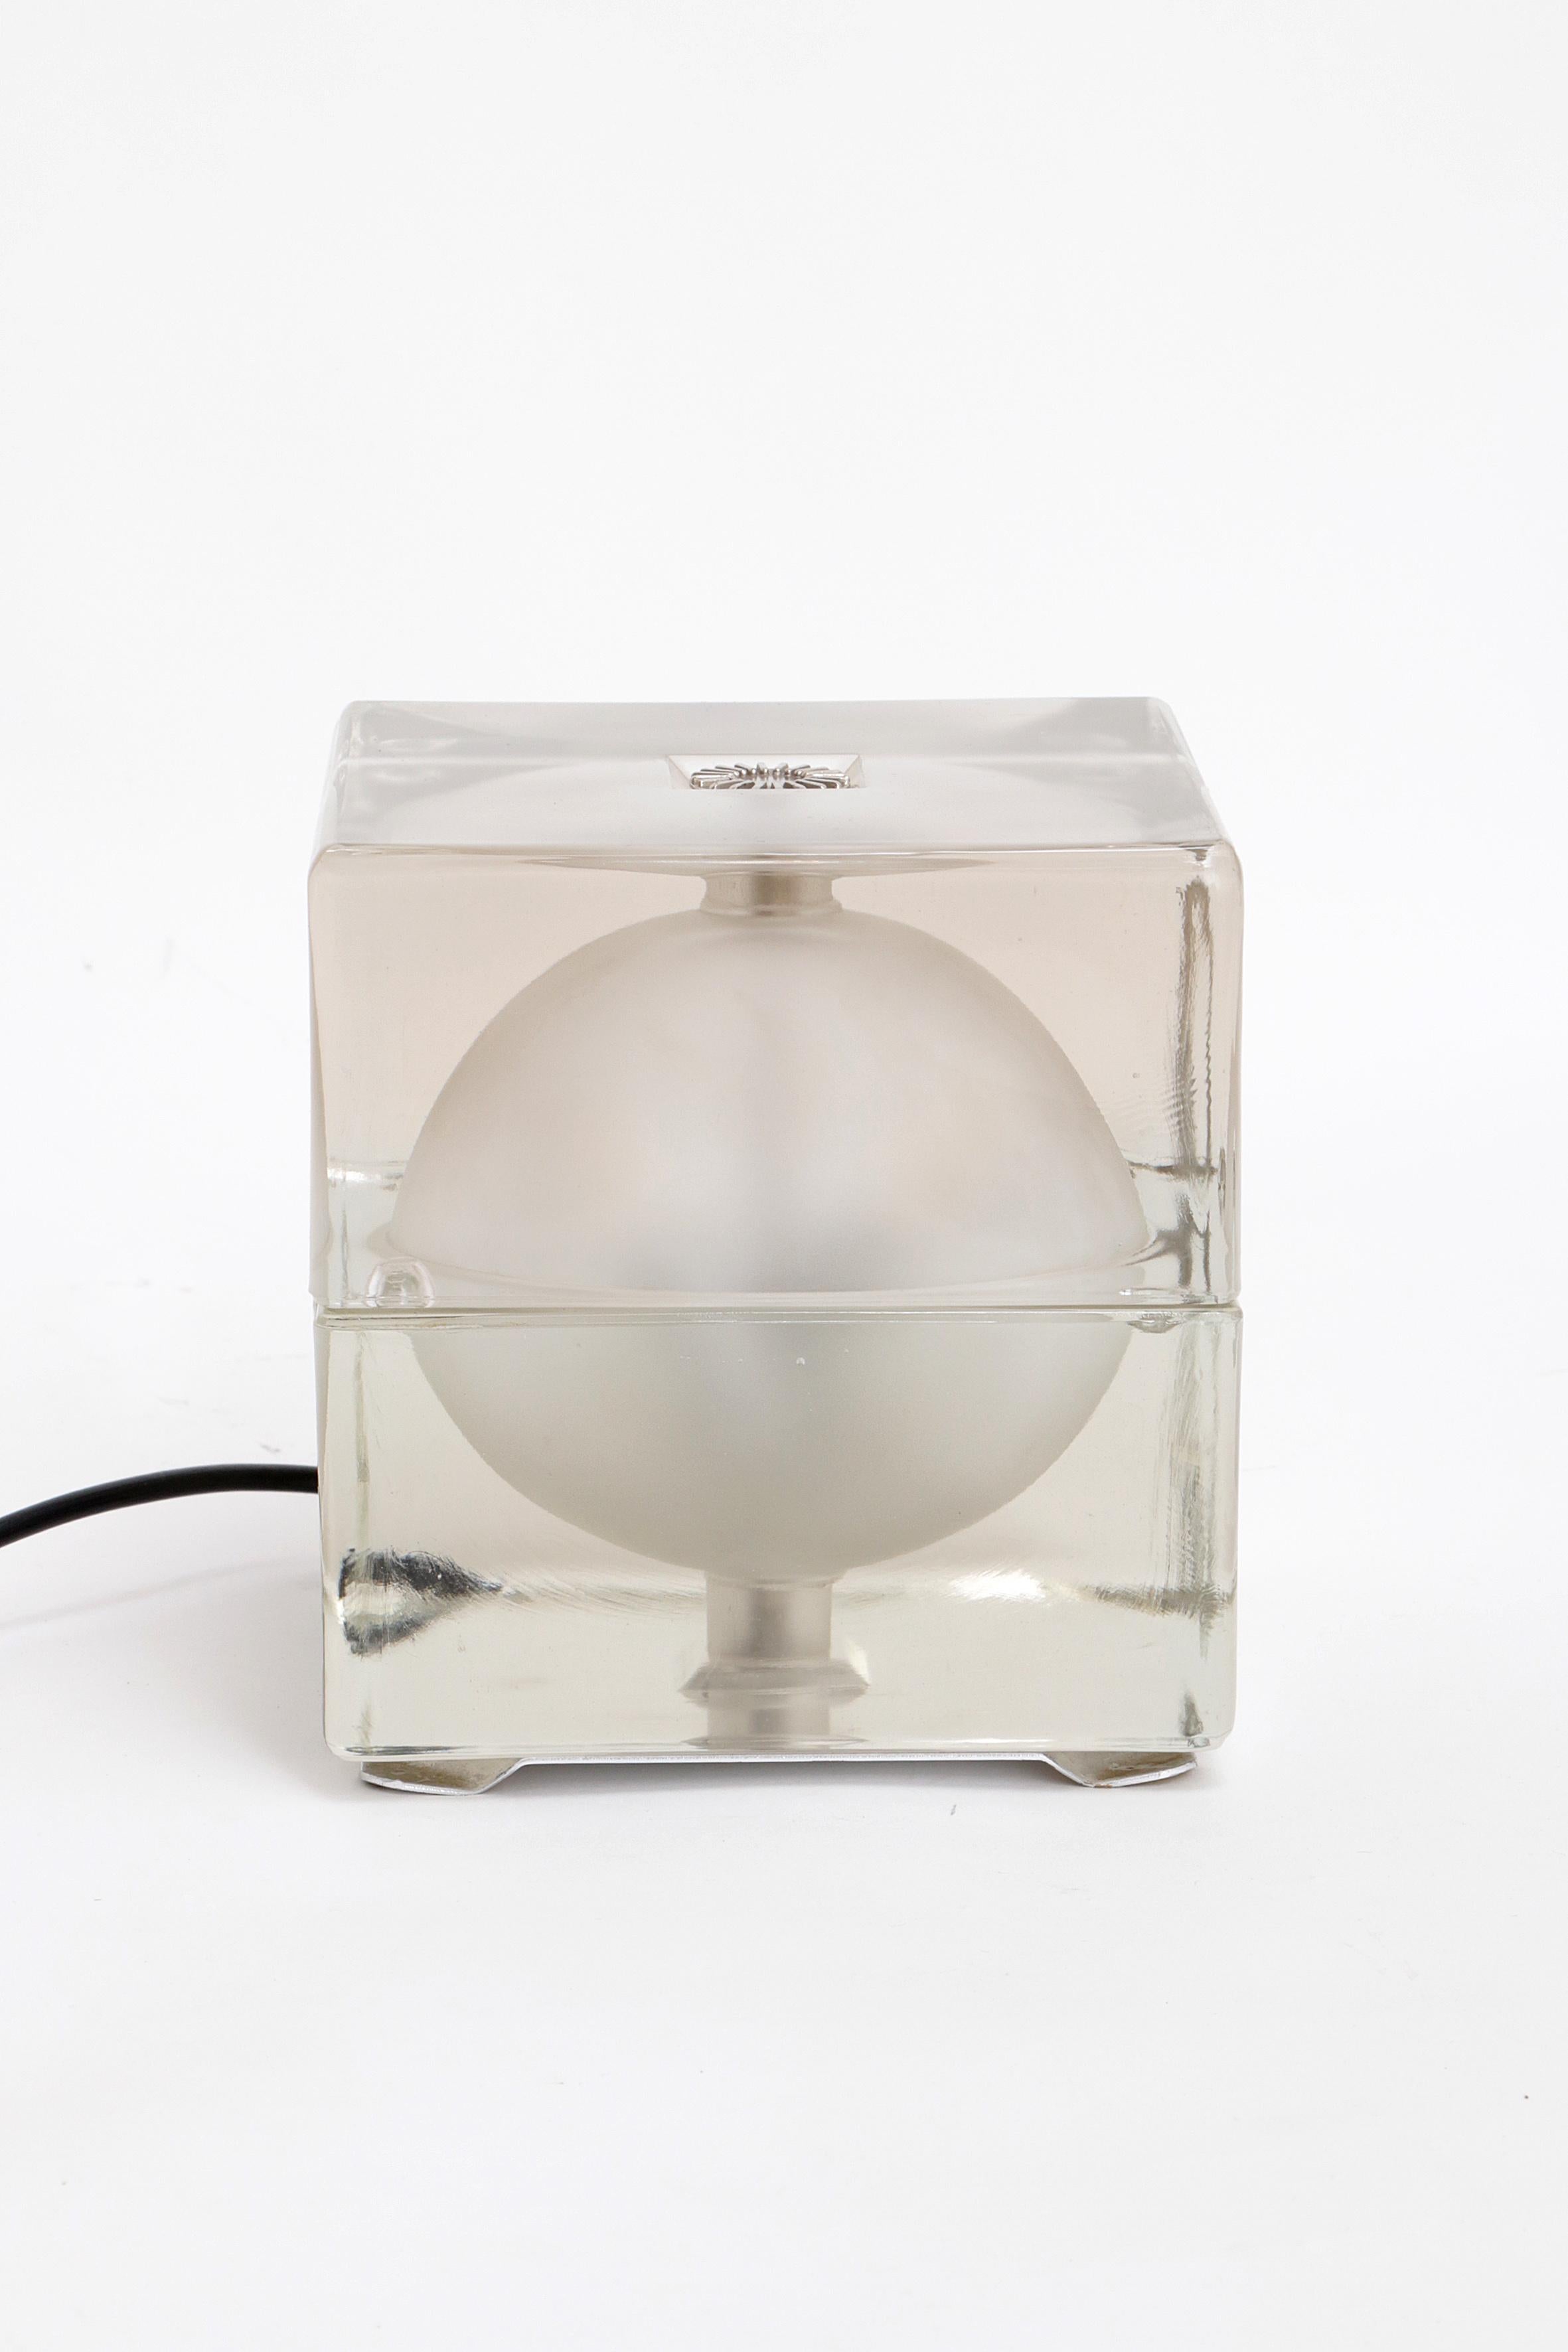 Italian Alessandro Mendini “Cubosfera” Table Lamp Metal Crome Glass 1968 Italy